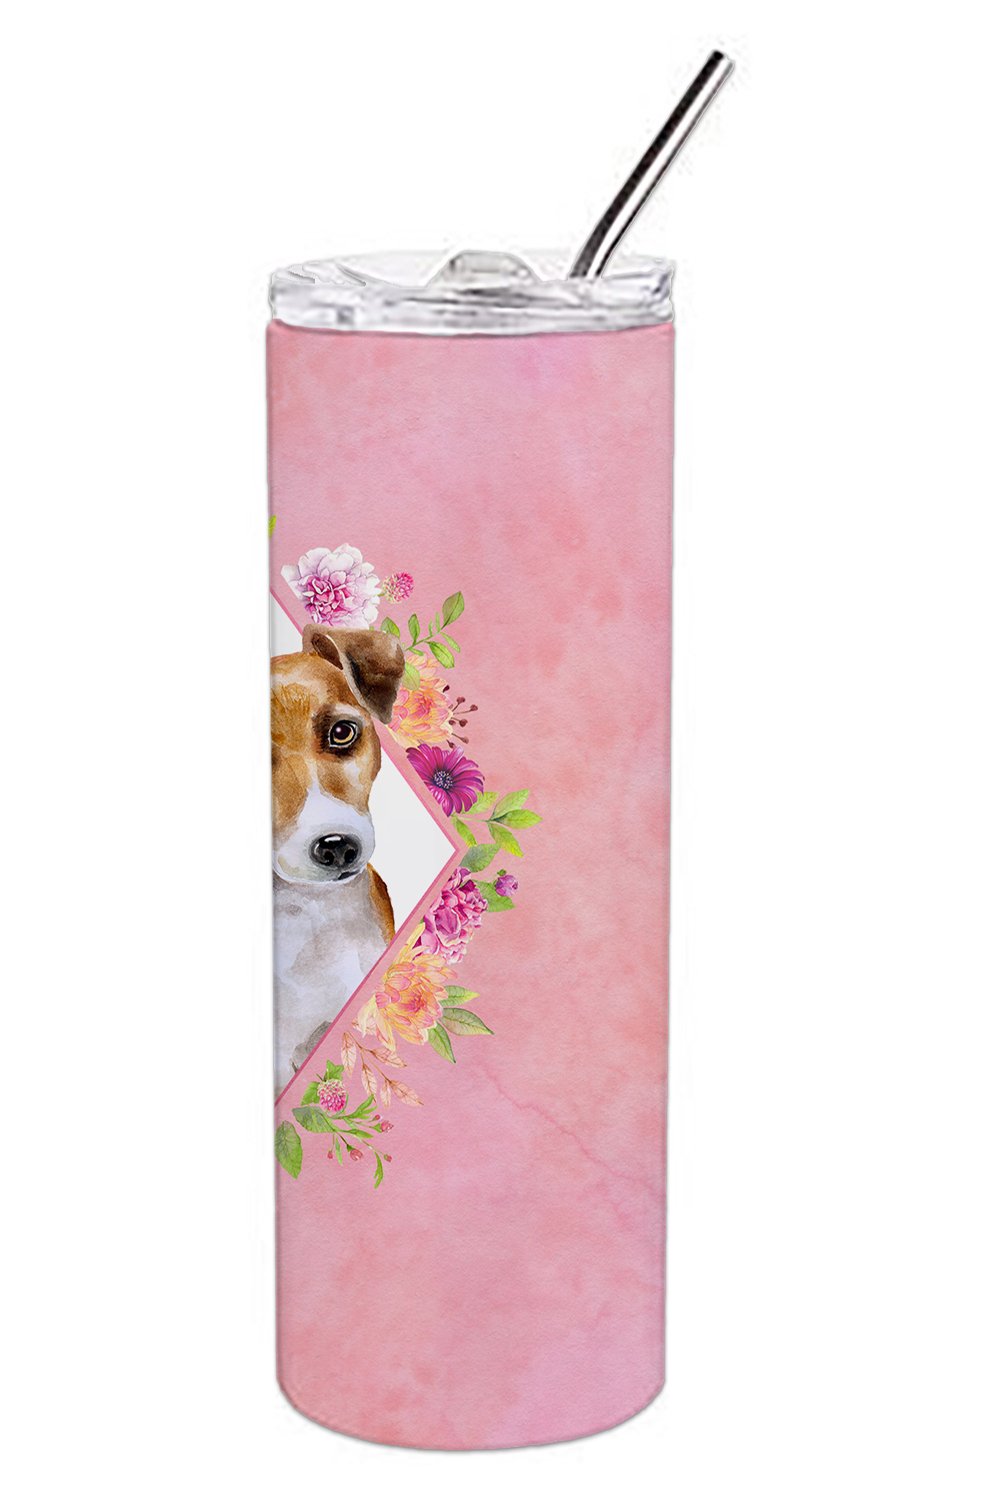 Jack Russell Terrier #1 Pink Flowers Double Walled Stainless Steel 20 oz Skinny Tumbler CK4155TBL20 by Caroline's Treasures